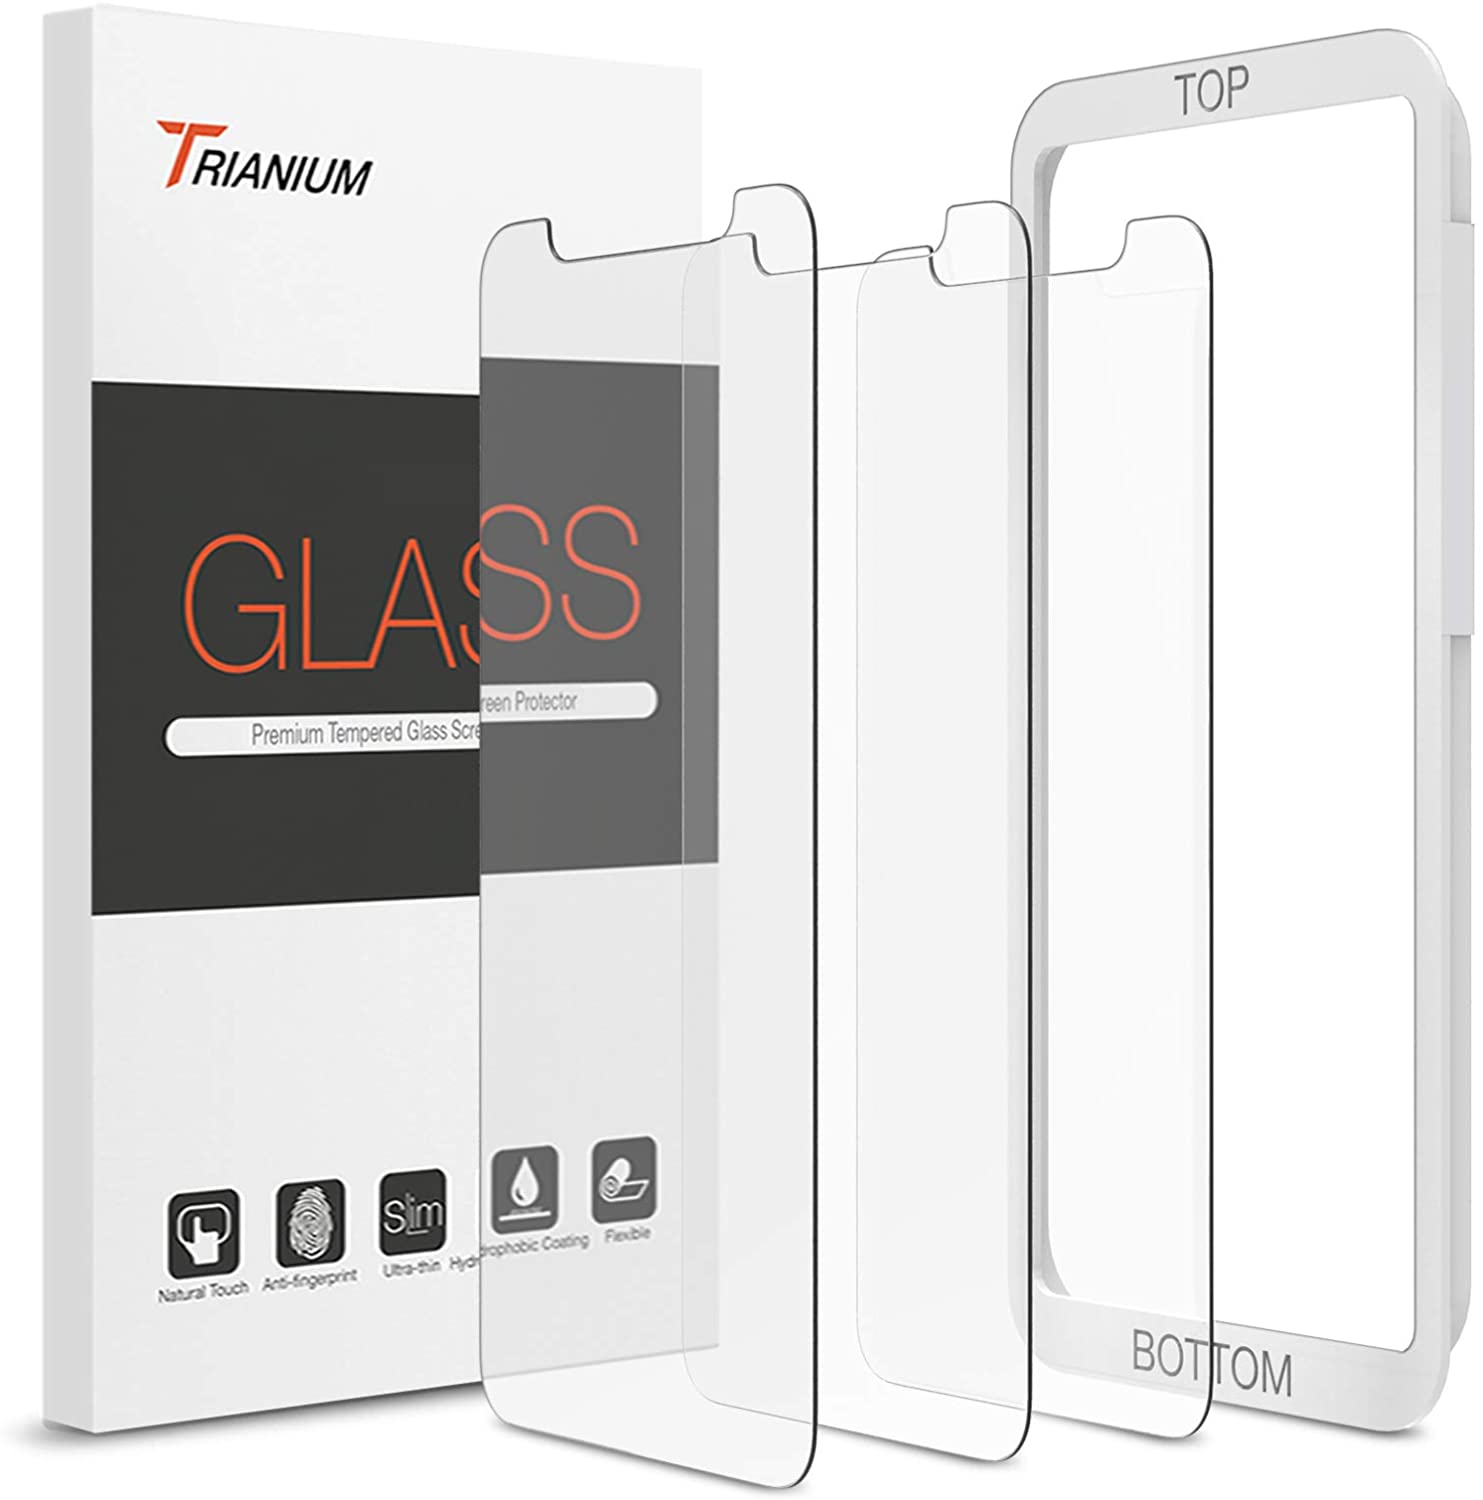 Trianium Scratch Proof iPhone Screen Protectors, 3-Pack